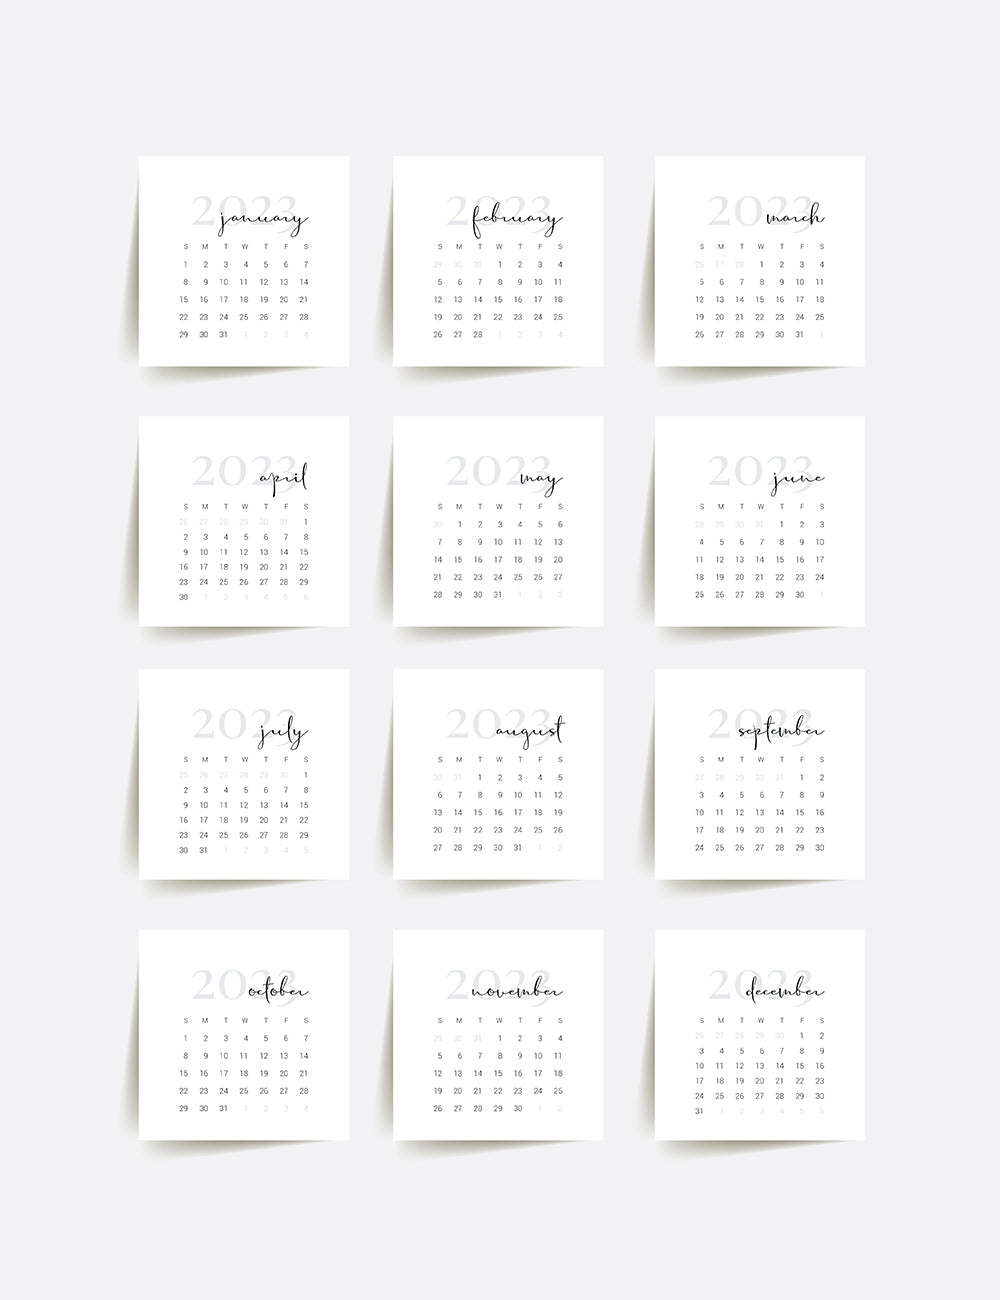 2023 Calendar | 3x3 | 2x2 | Printable Mini Calendar 2023 | Planner Cards | Minimal Aesthetic | Clean Design |  PAPER MOON Art & Design